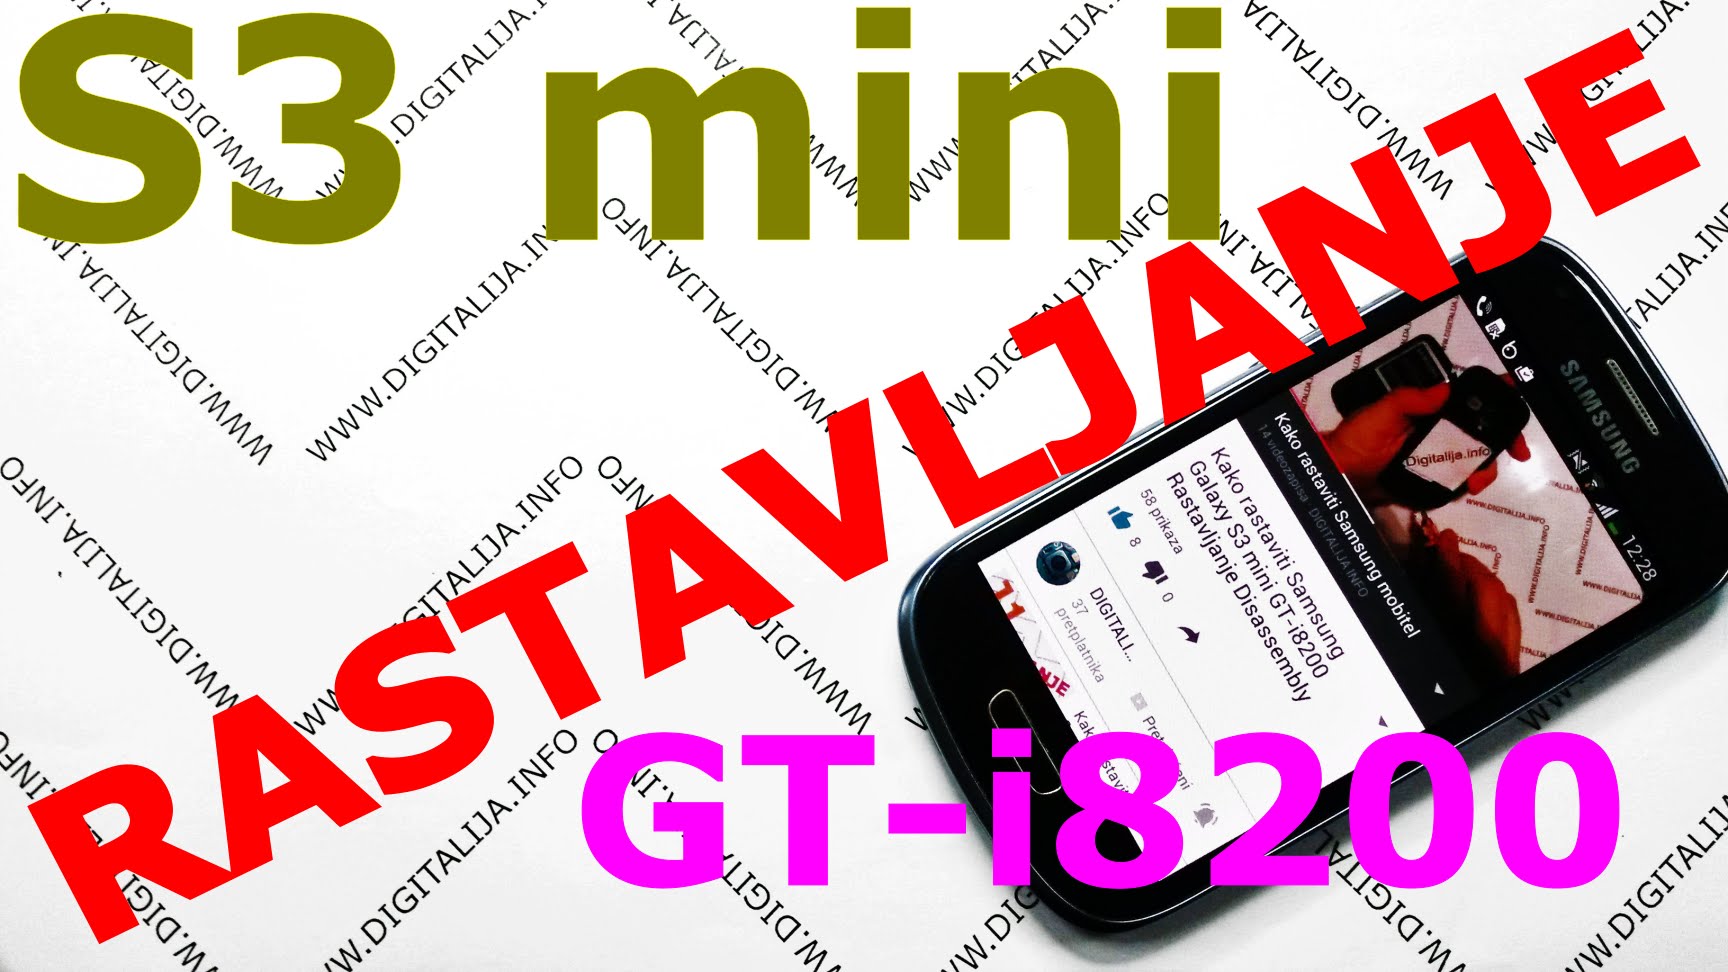 Kako rastaviti Samsung Galaxy S3 mini GT-i8200